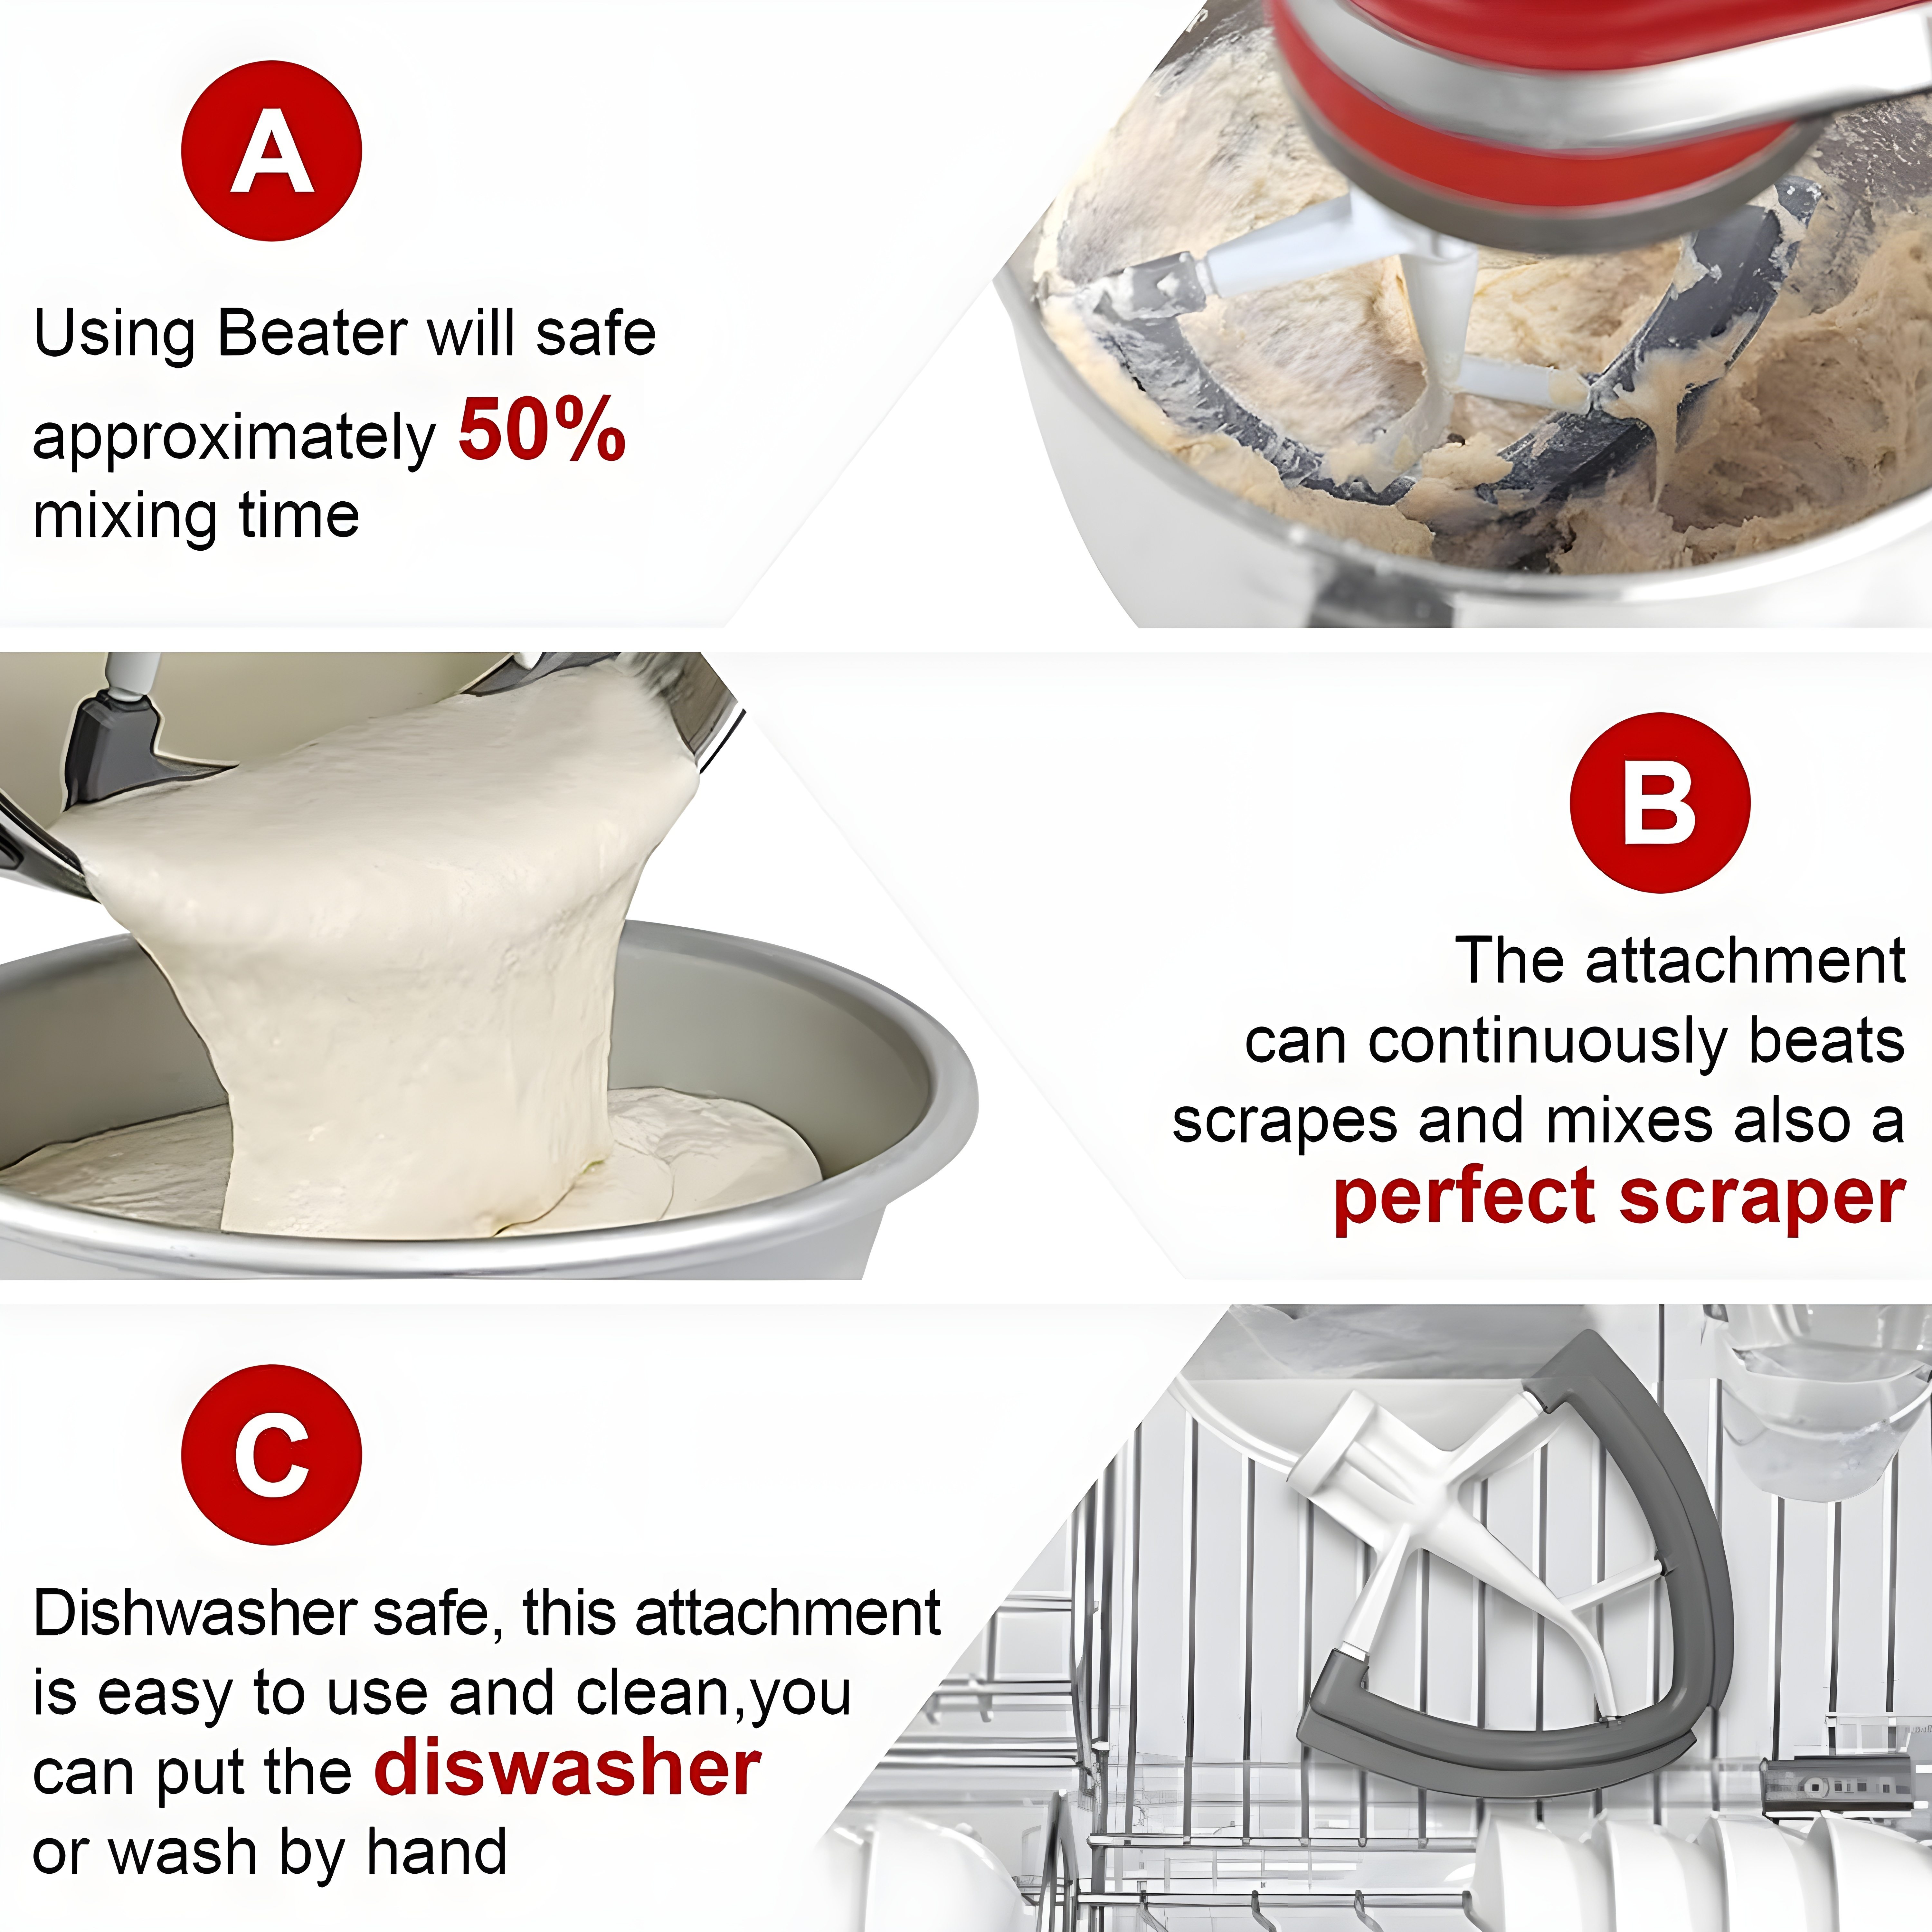 Put Kitchenaid Mixer Attachments Dishwasher - Flex Edge Beater